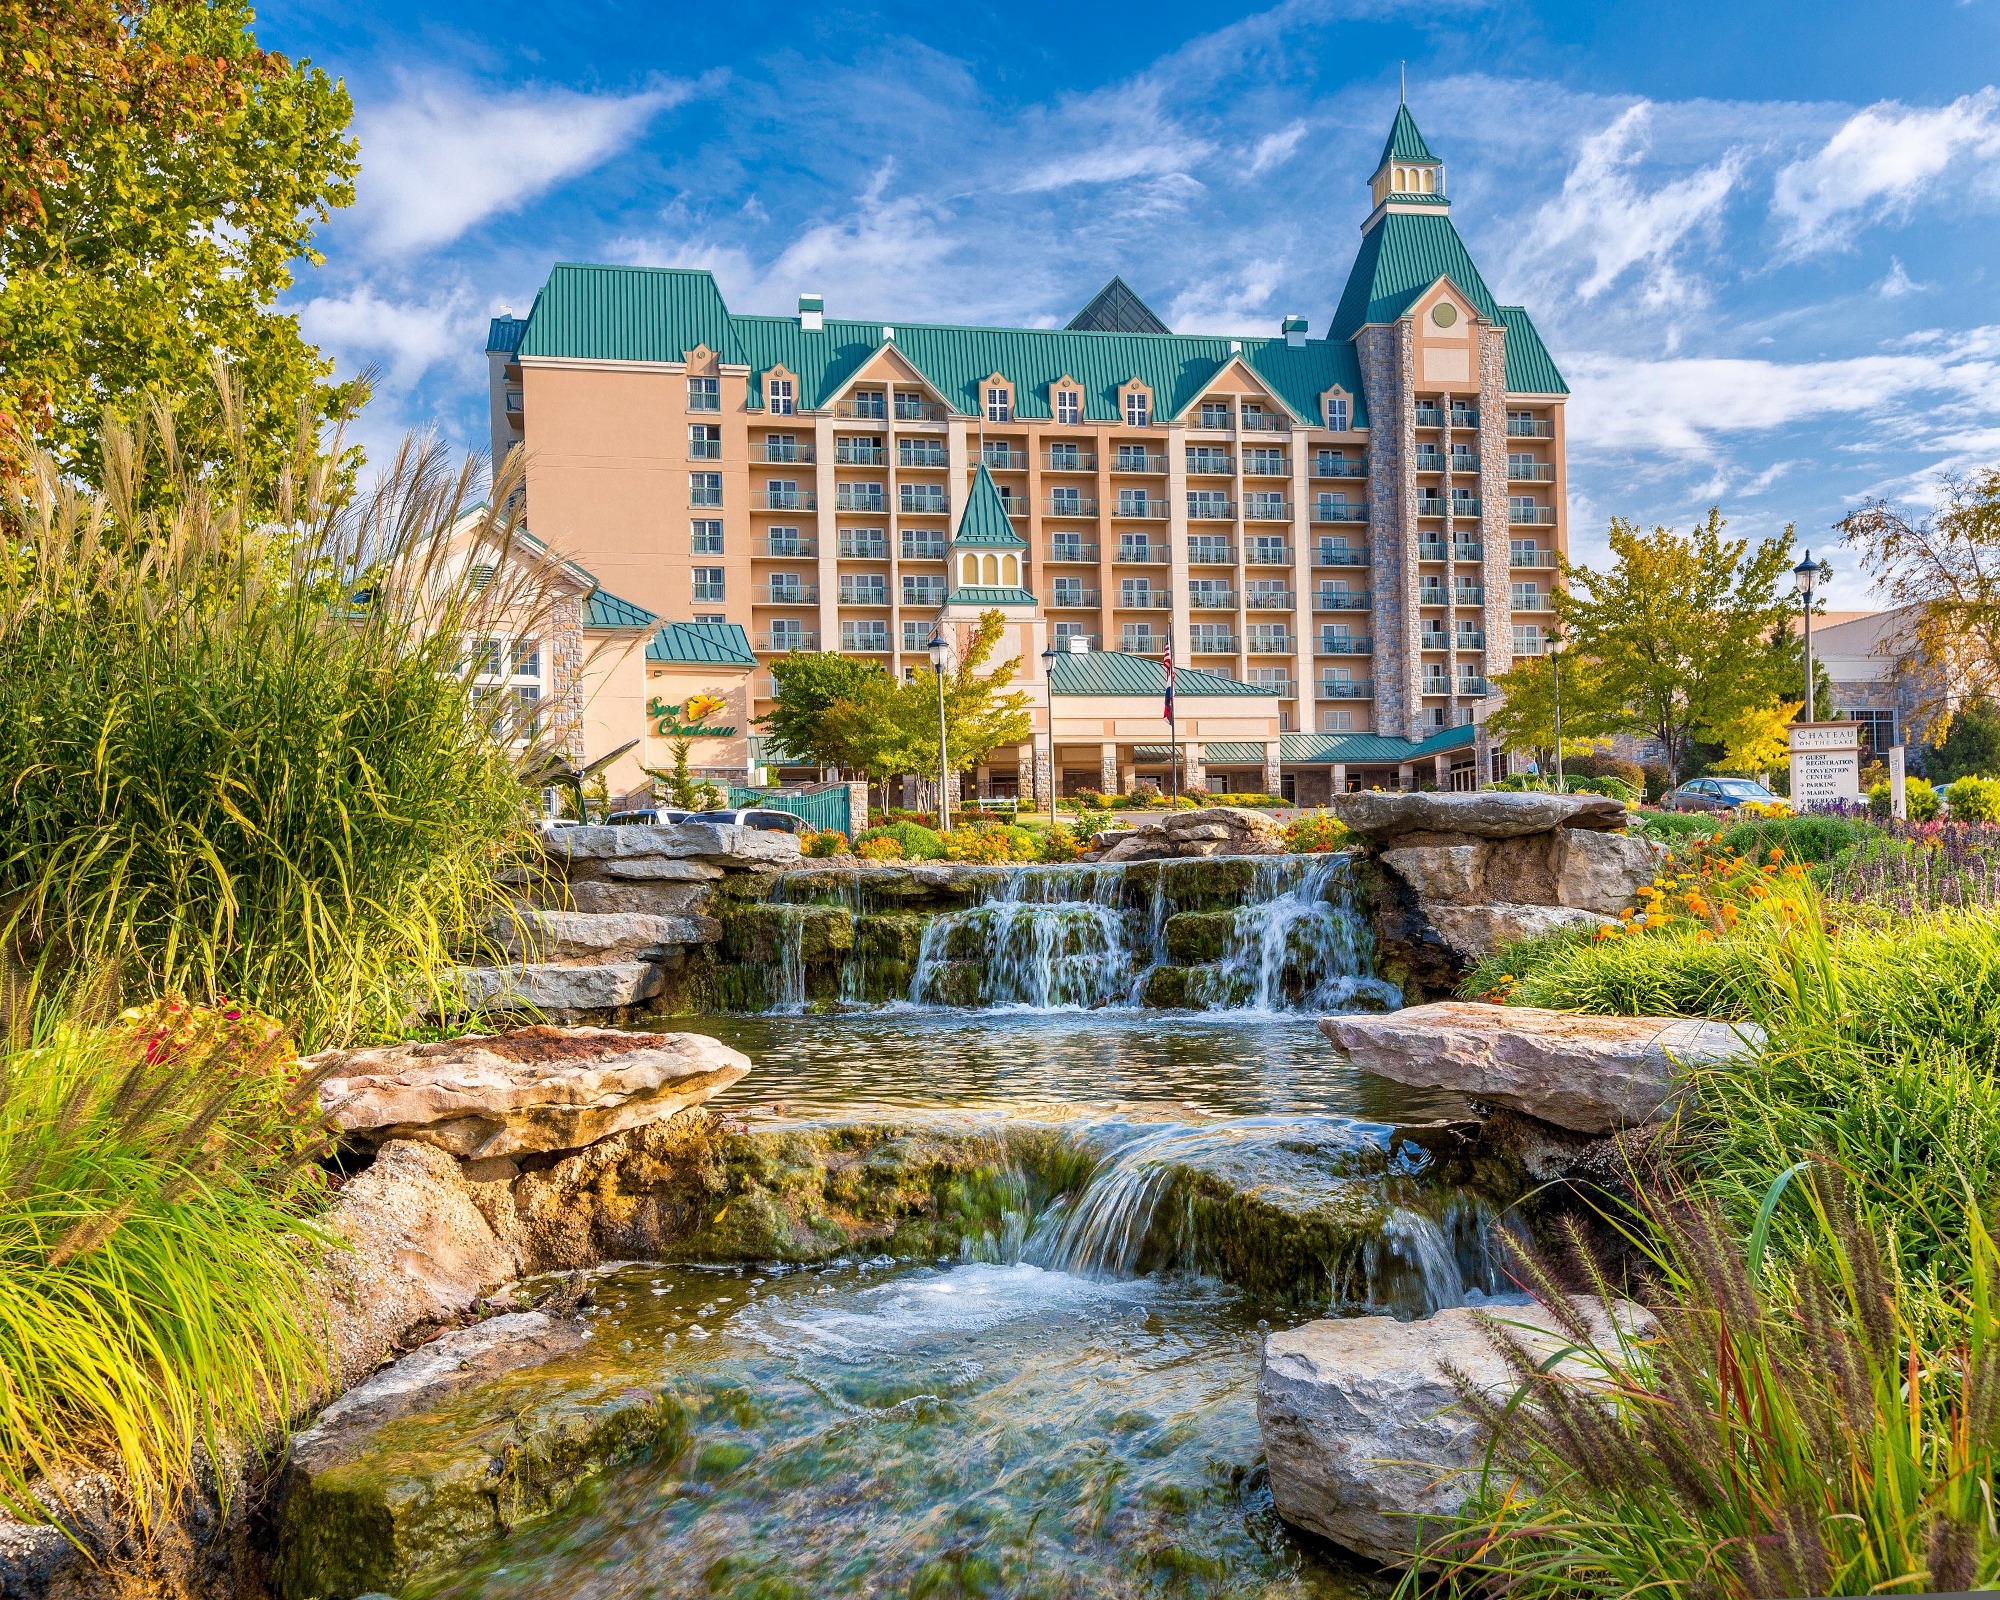 Best Hotels in Branson, MO